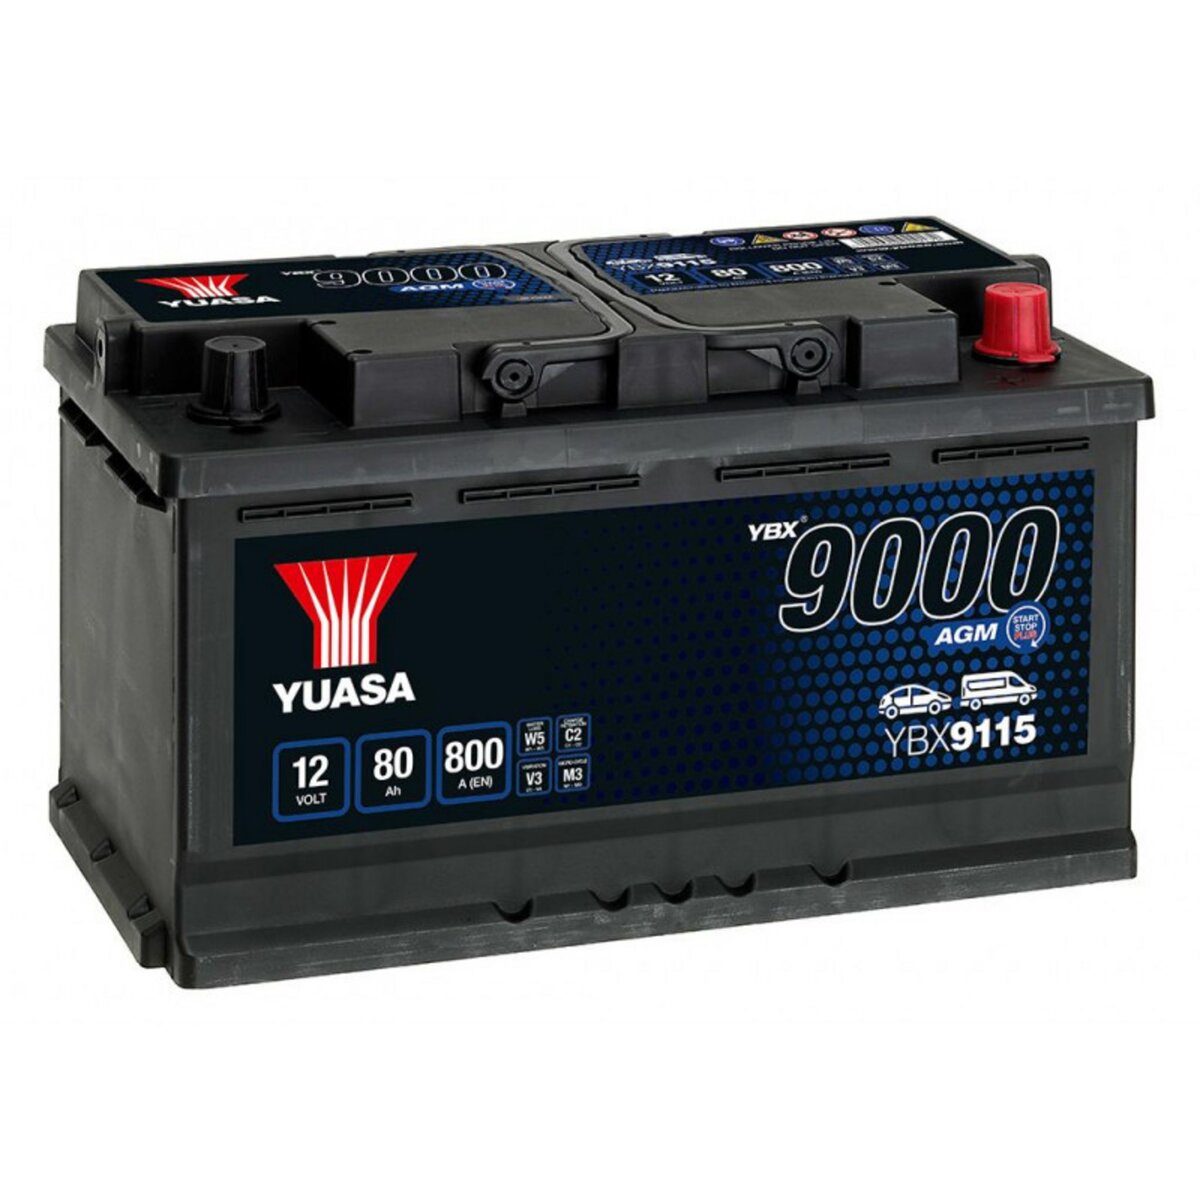 YUASA Batterie YUASA YBX9115 AGM 12V 80AH 800A